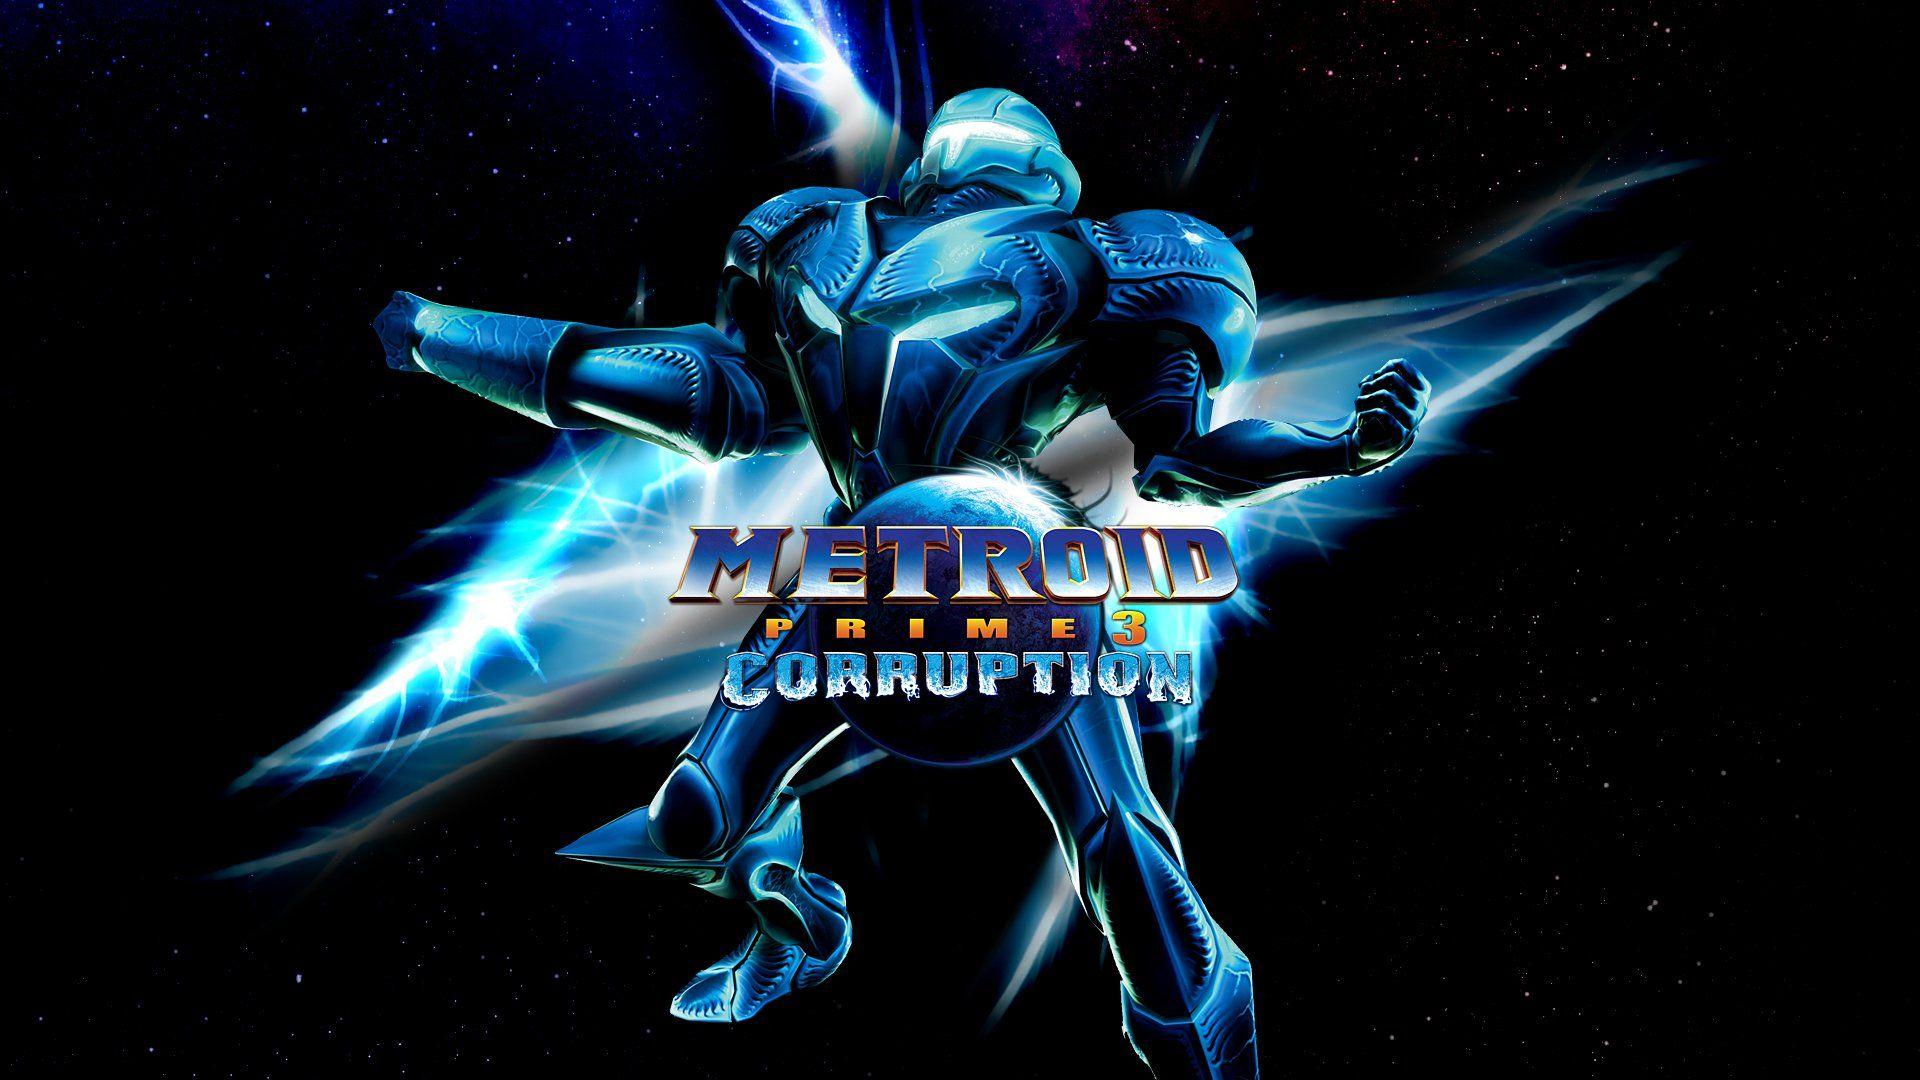 Metroid Prime 3: Corruption Full HD Bakgrund and Bakgrund